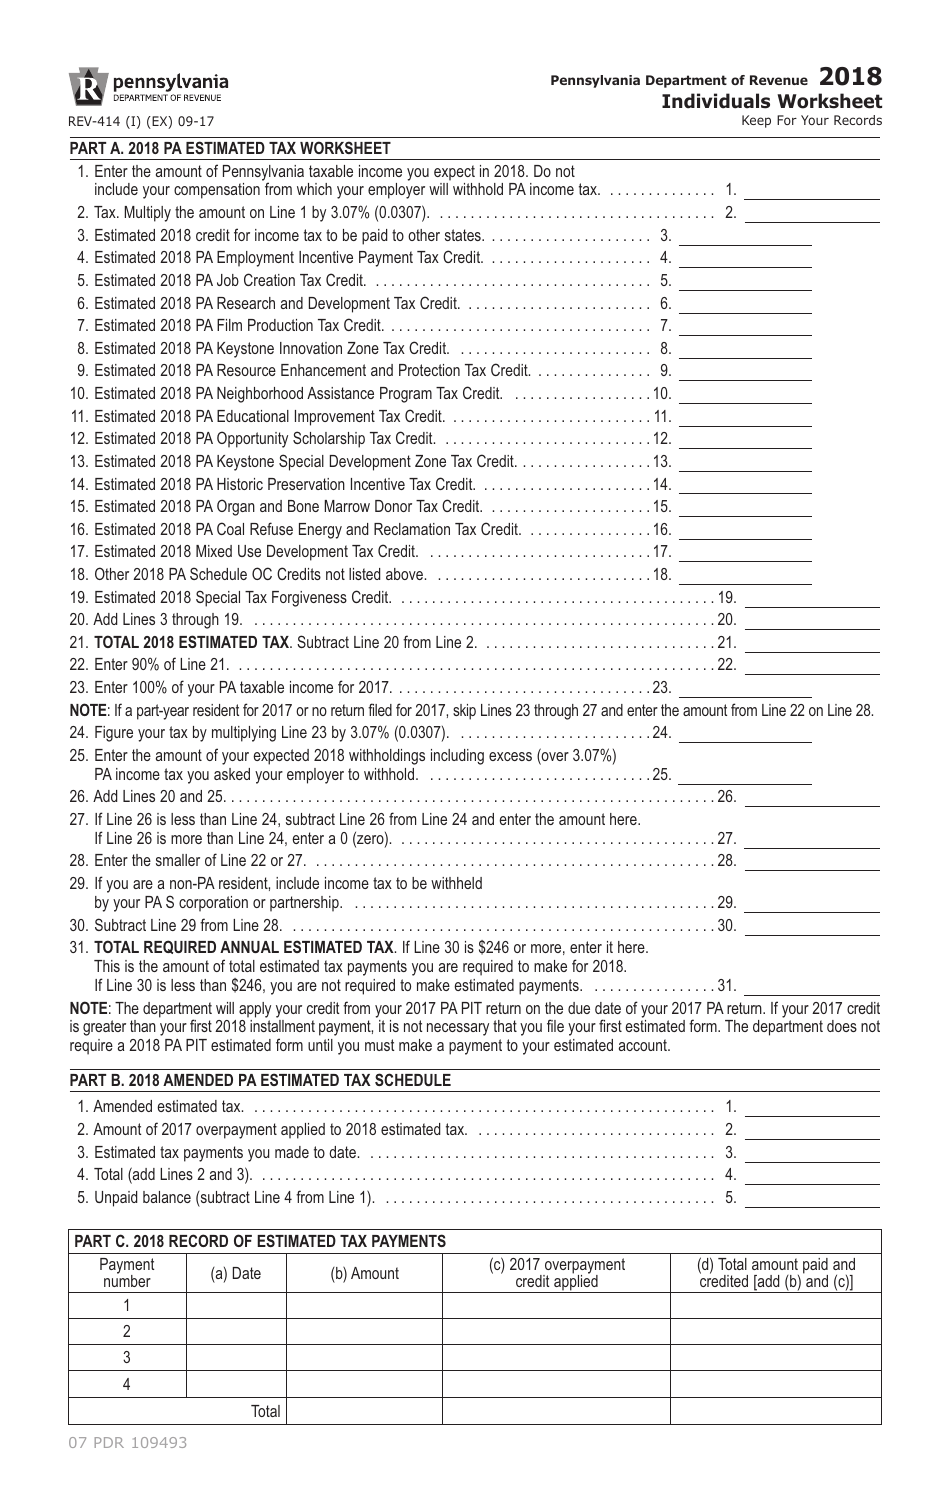 Form REV-414(I) Individuals Worksheet - Pennsylvania, Page 1